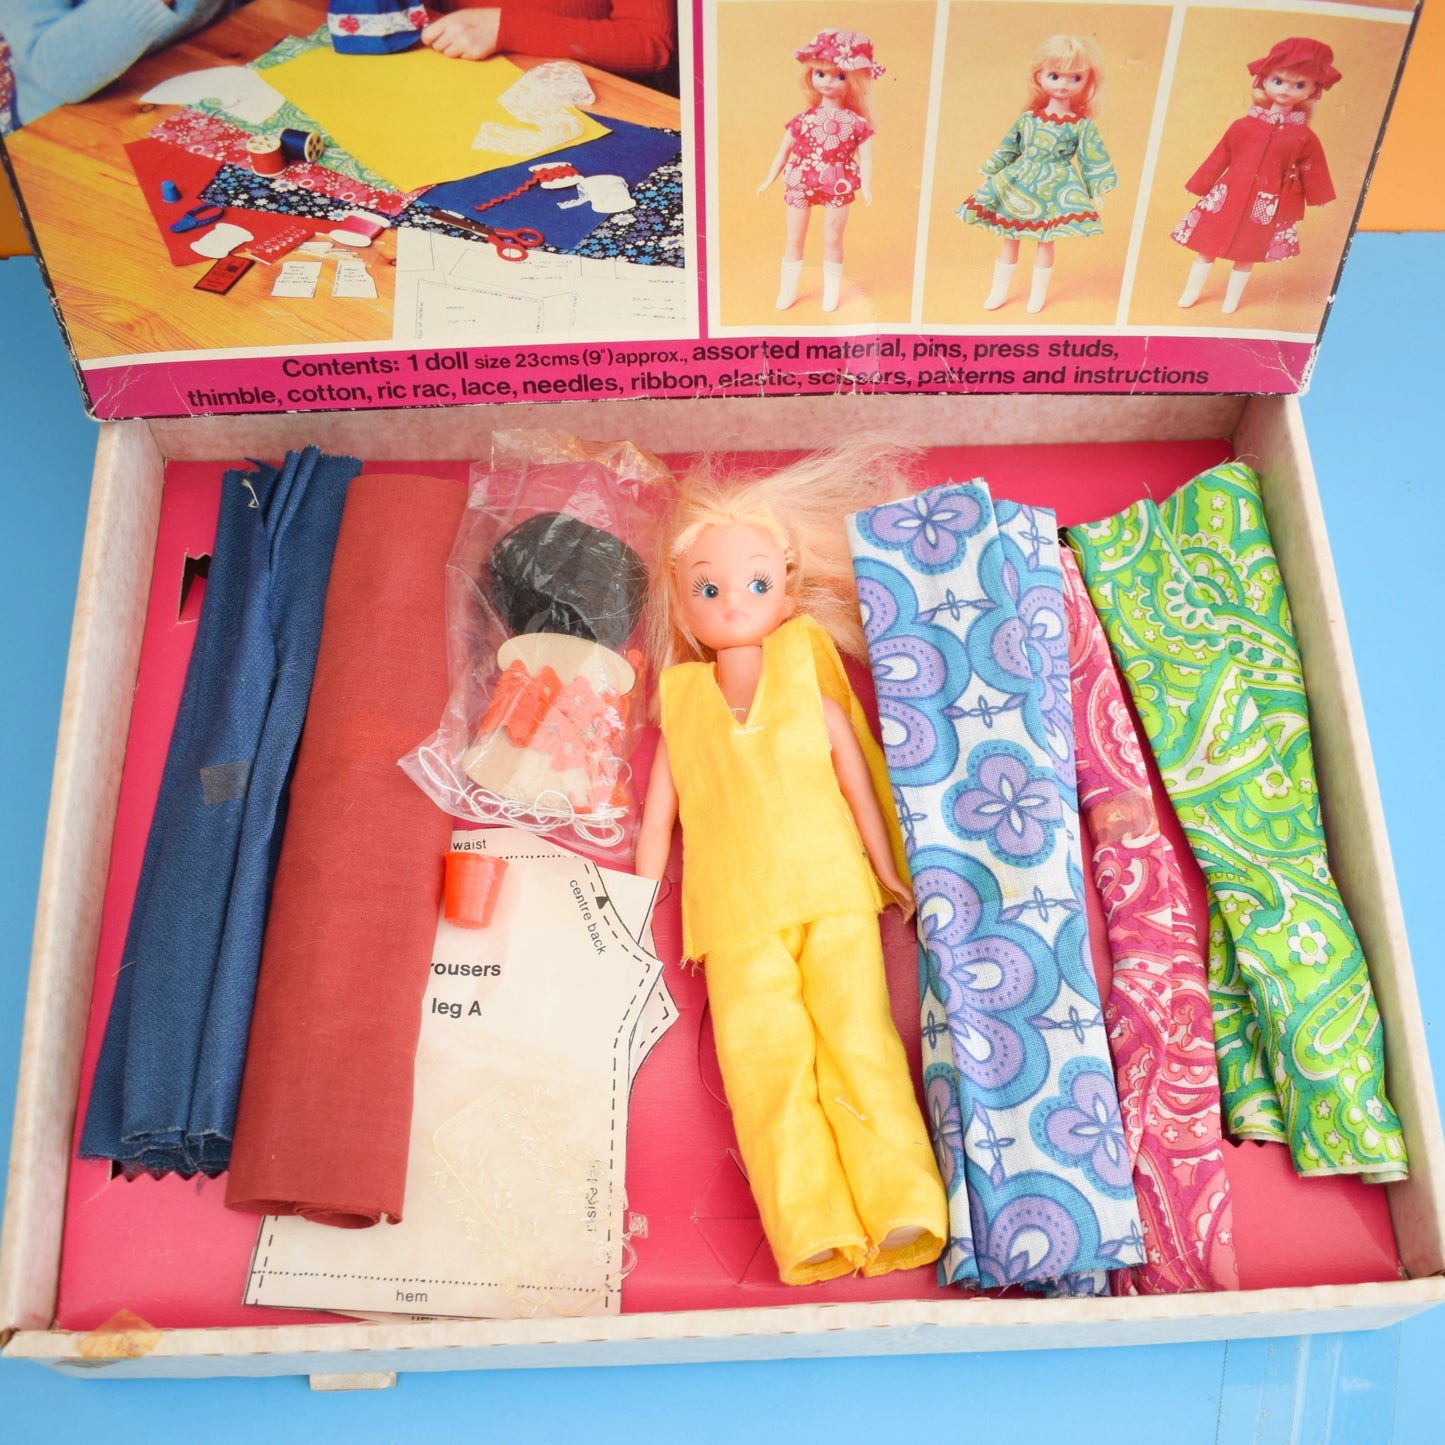 Vintage 1970s Dress A Doll Set - Sewing